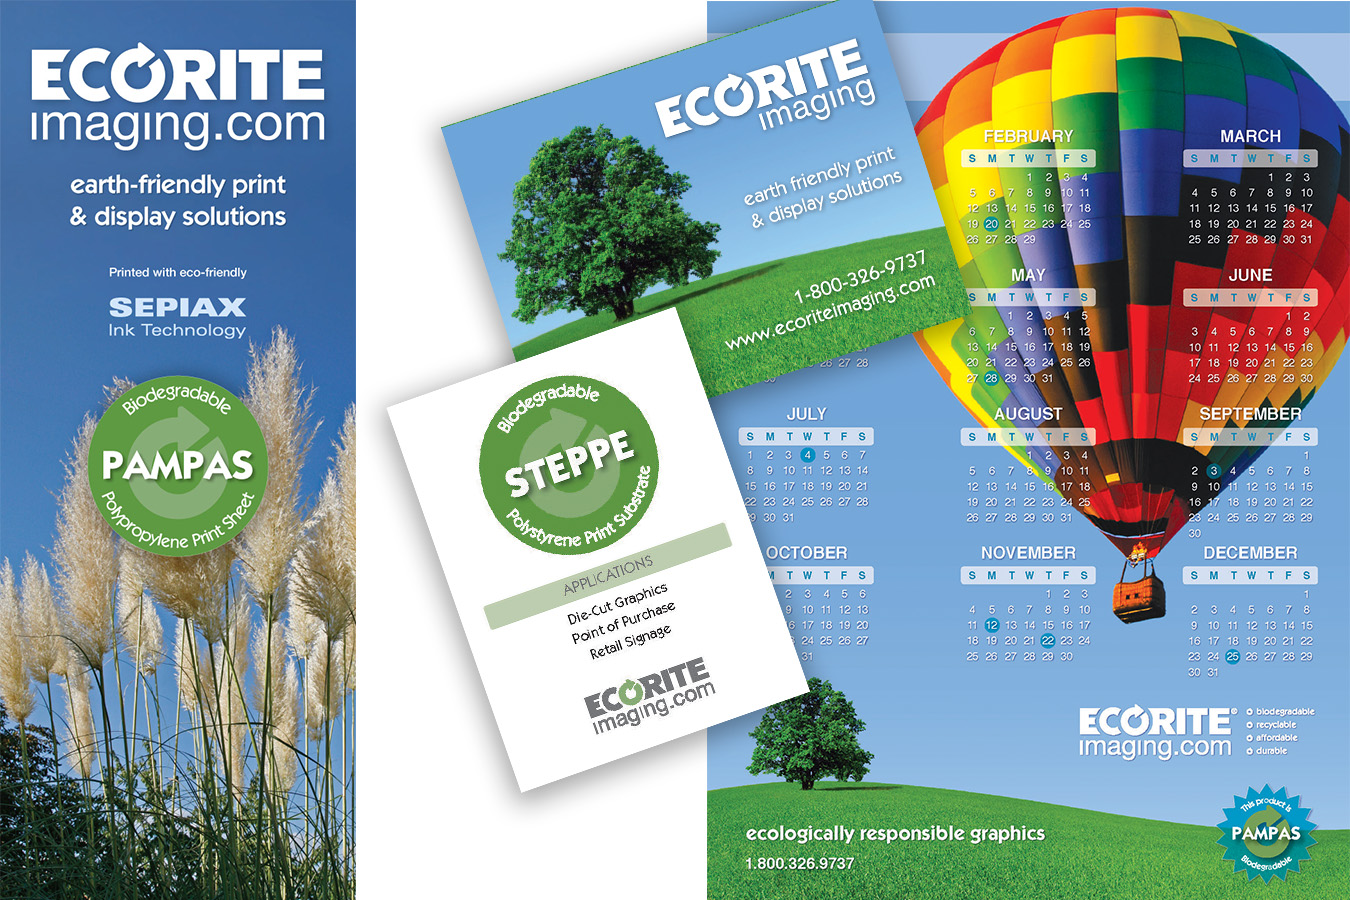 ecorite samps1 : Pampas banner, refigerator magnet, sample card and calendar give aways for Ecorite Imaging